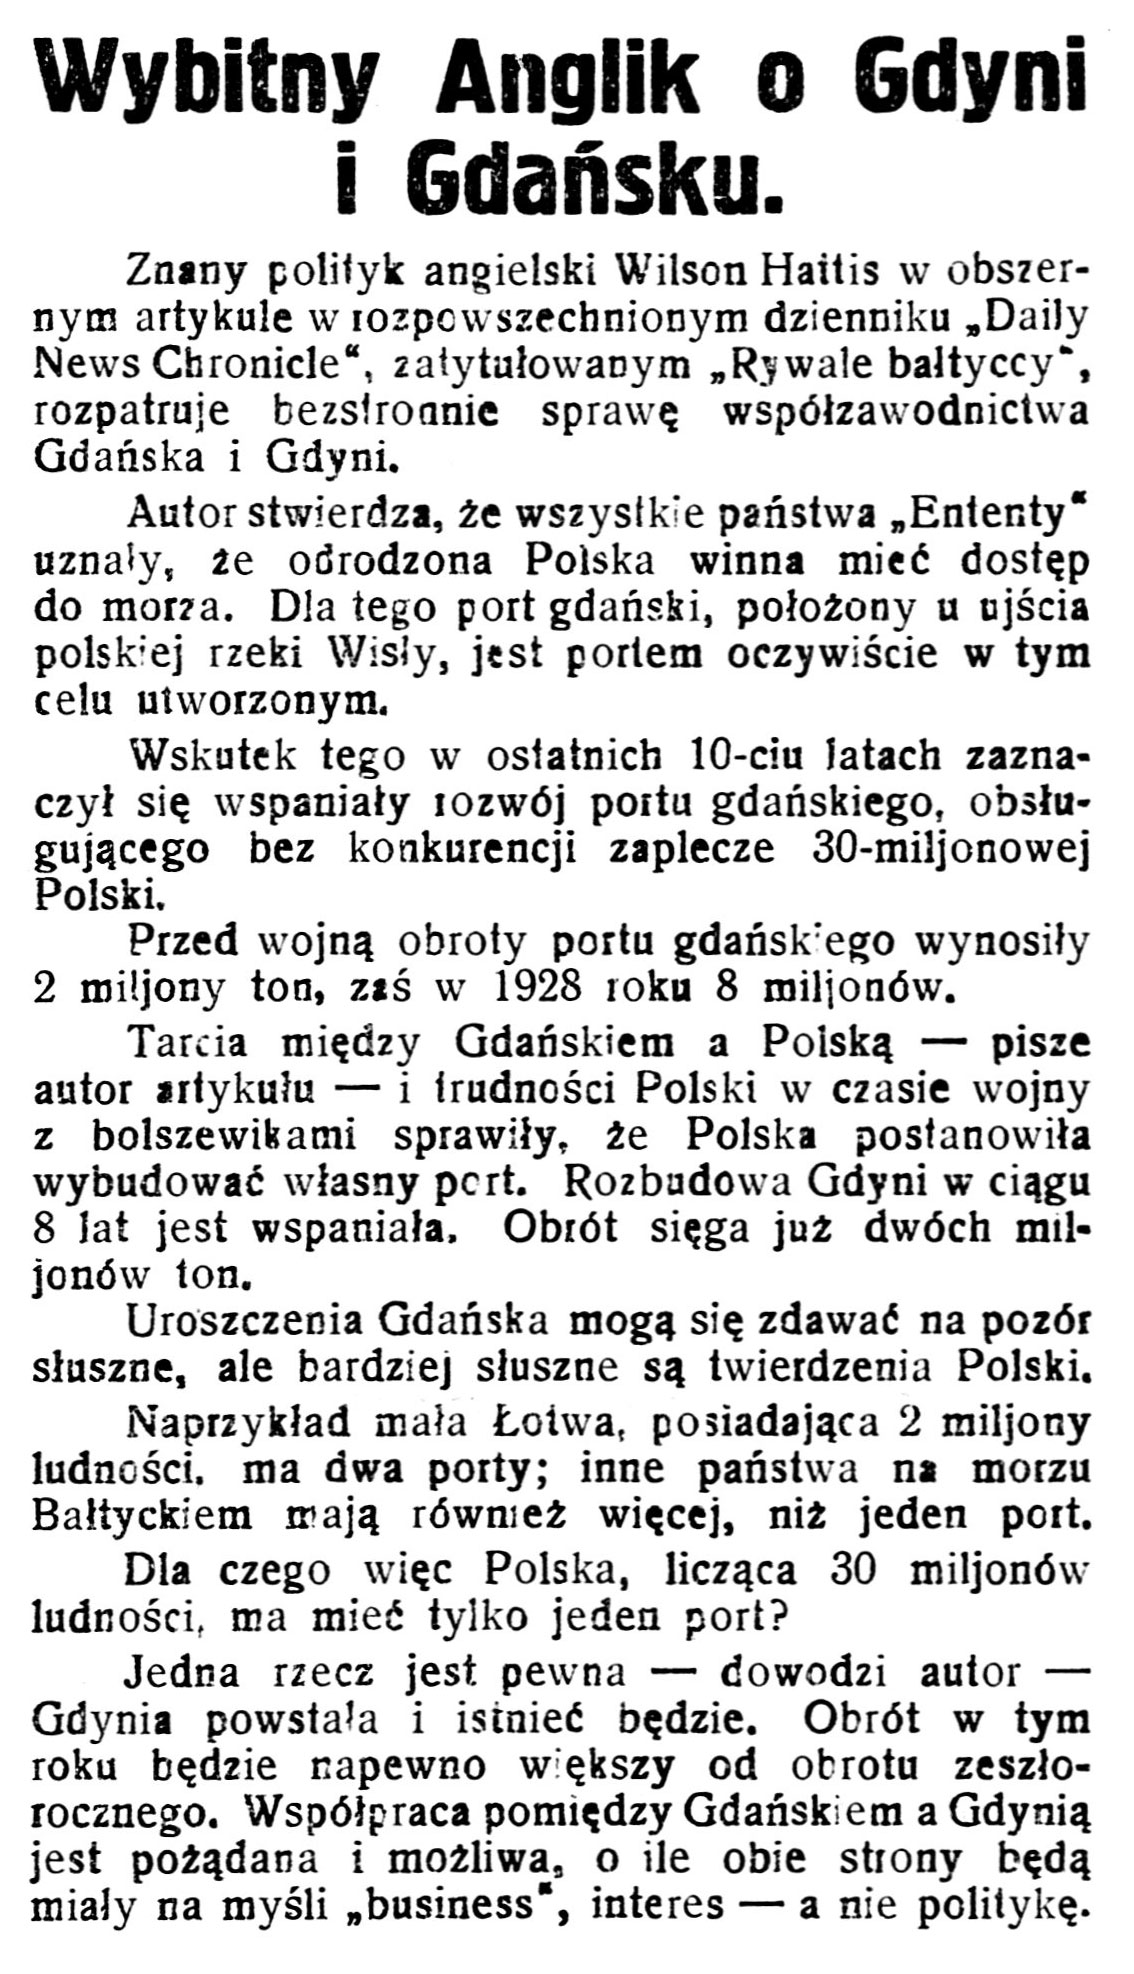 Wybitny Anglik o Gdyni i Gdańsku // Gazeta Kartuska. - 1930, nr 176, s. 3